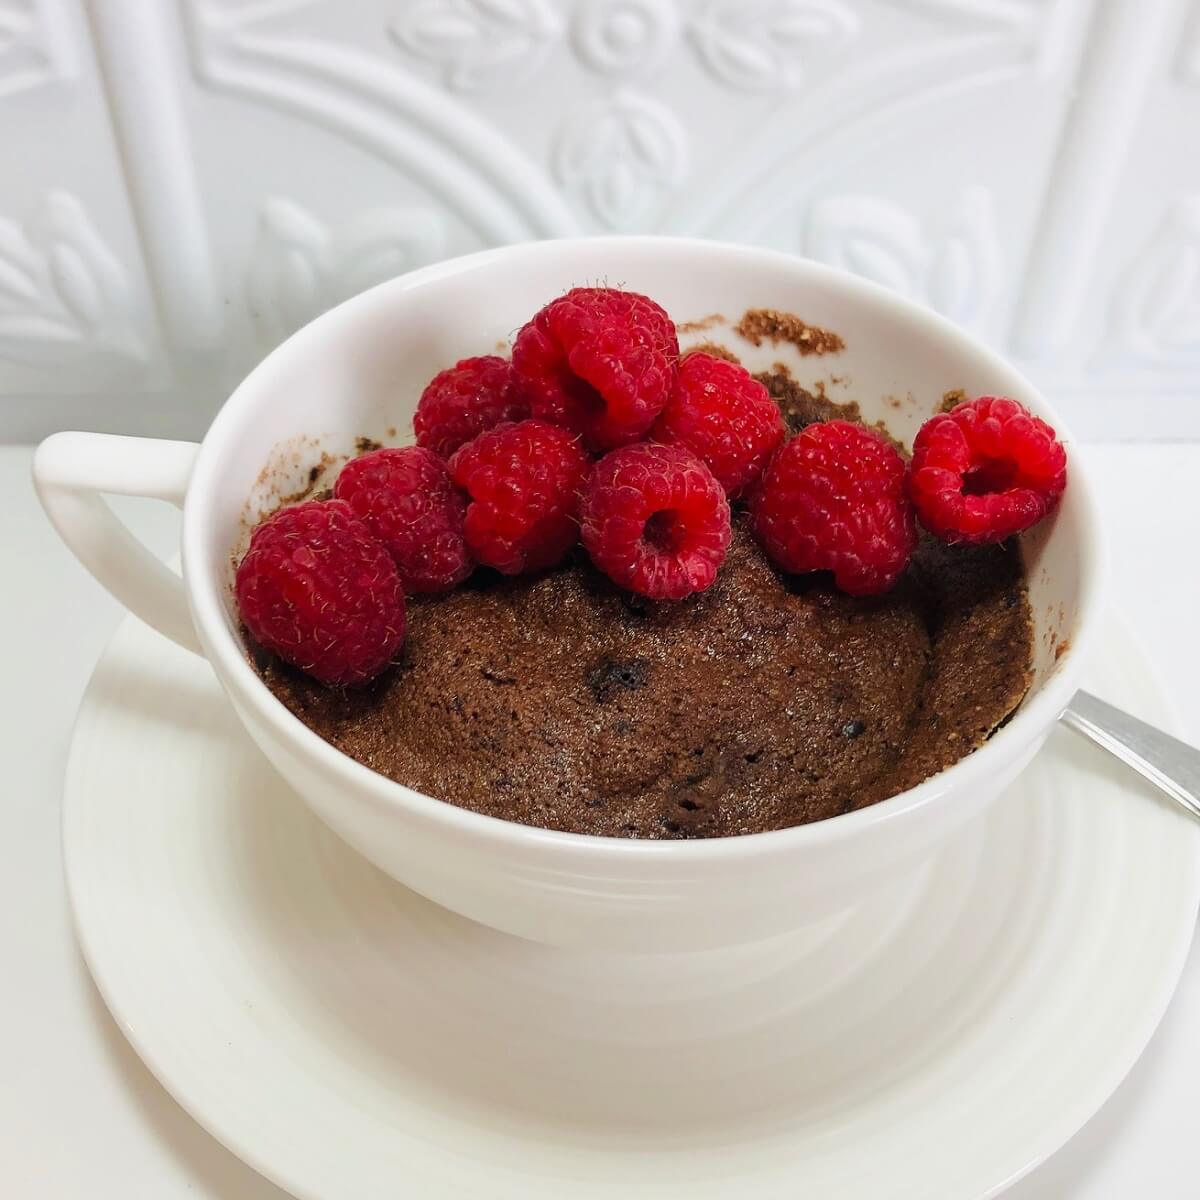 Paleo chocolate cake in a mug with raspberries on top.